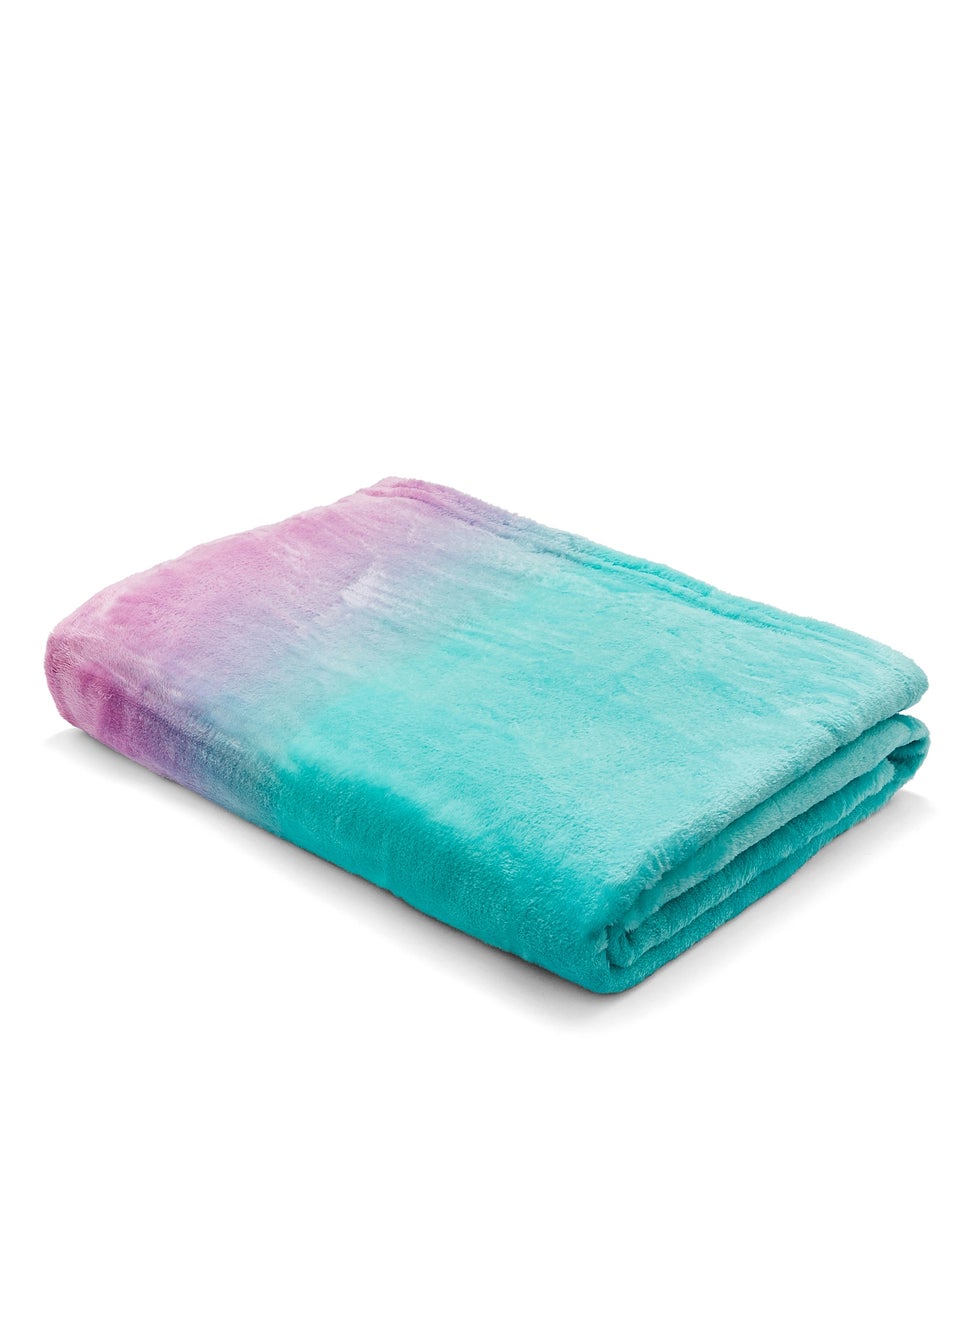 Catherine Lansfield Уютное флисовое одеяло Русалка 130x170см, розовый affenpinscher уютное флисовое одеяло премиум класса с 3d принтом шерпа одеяло на кровать домашний текстиль